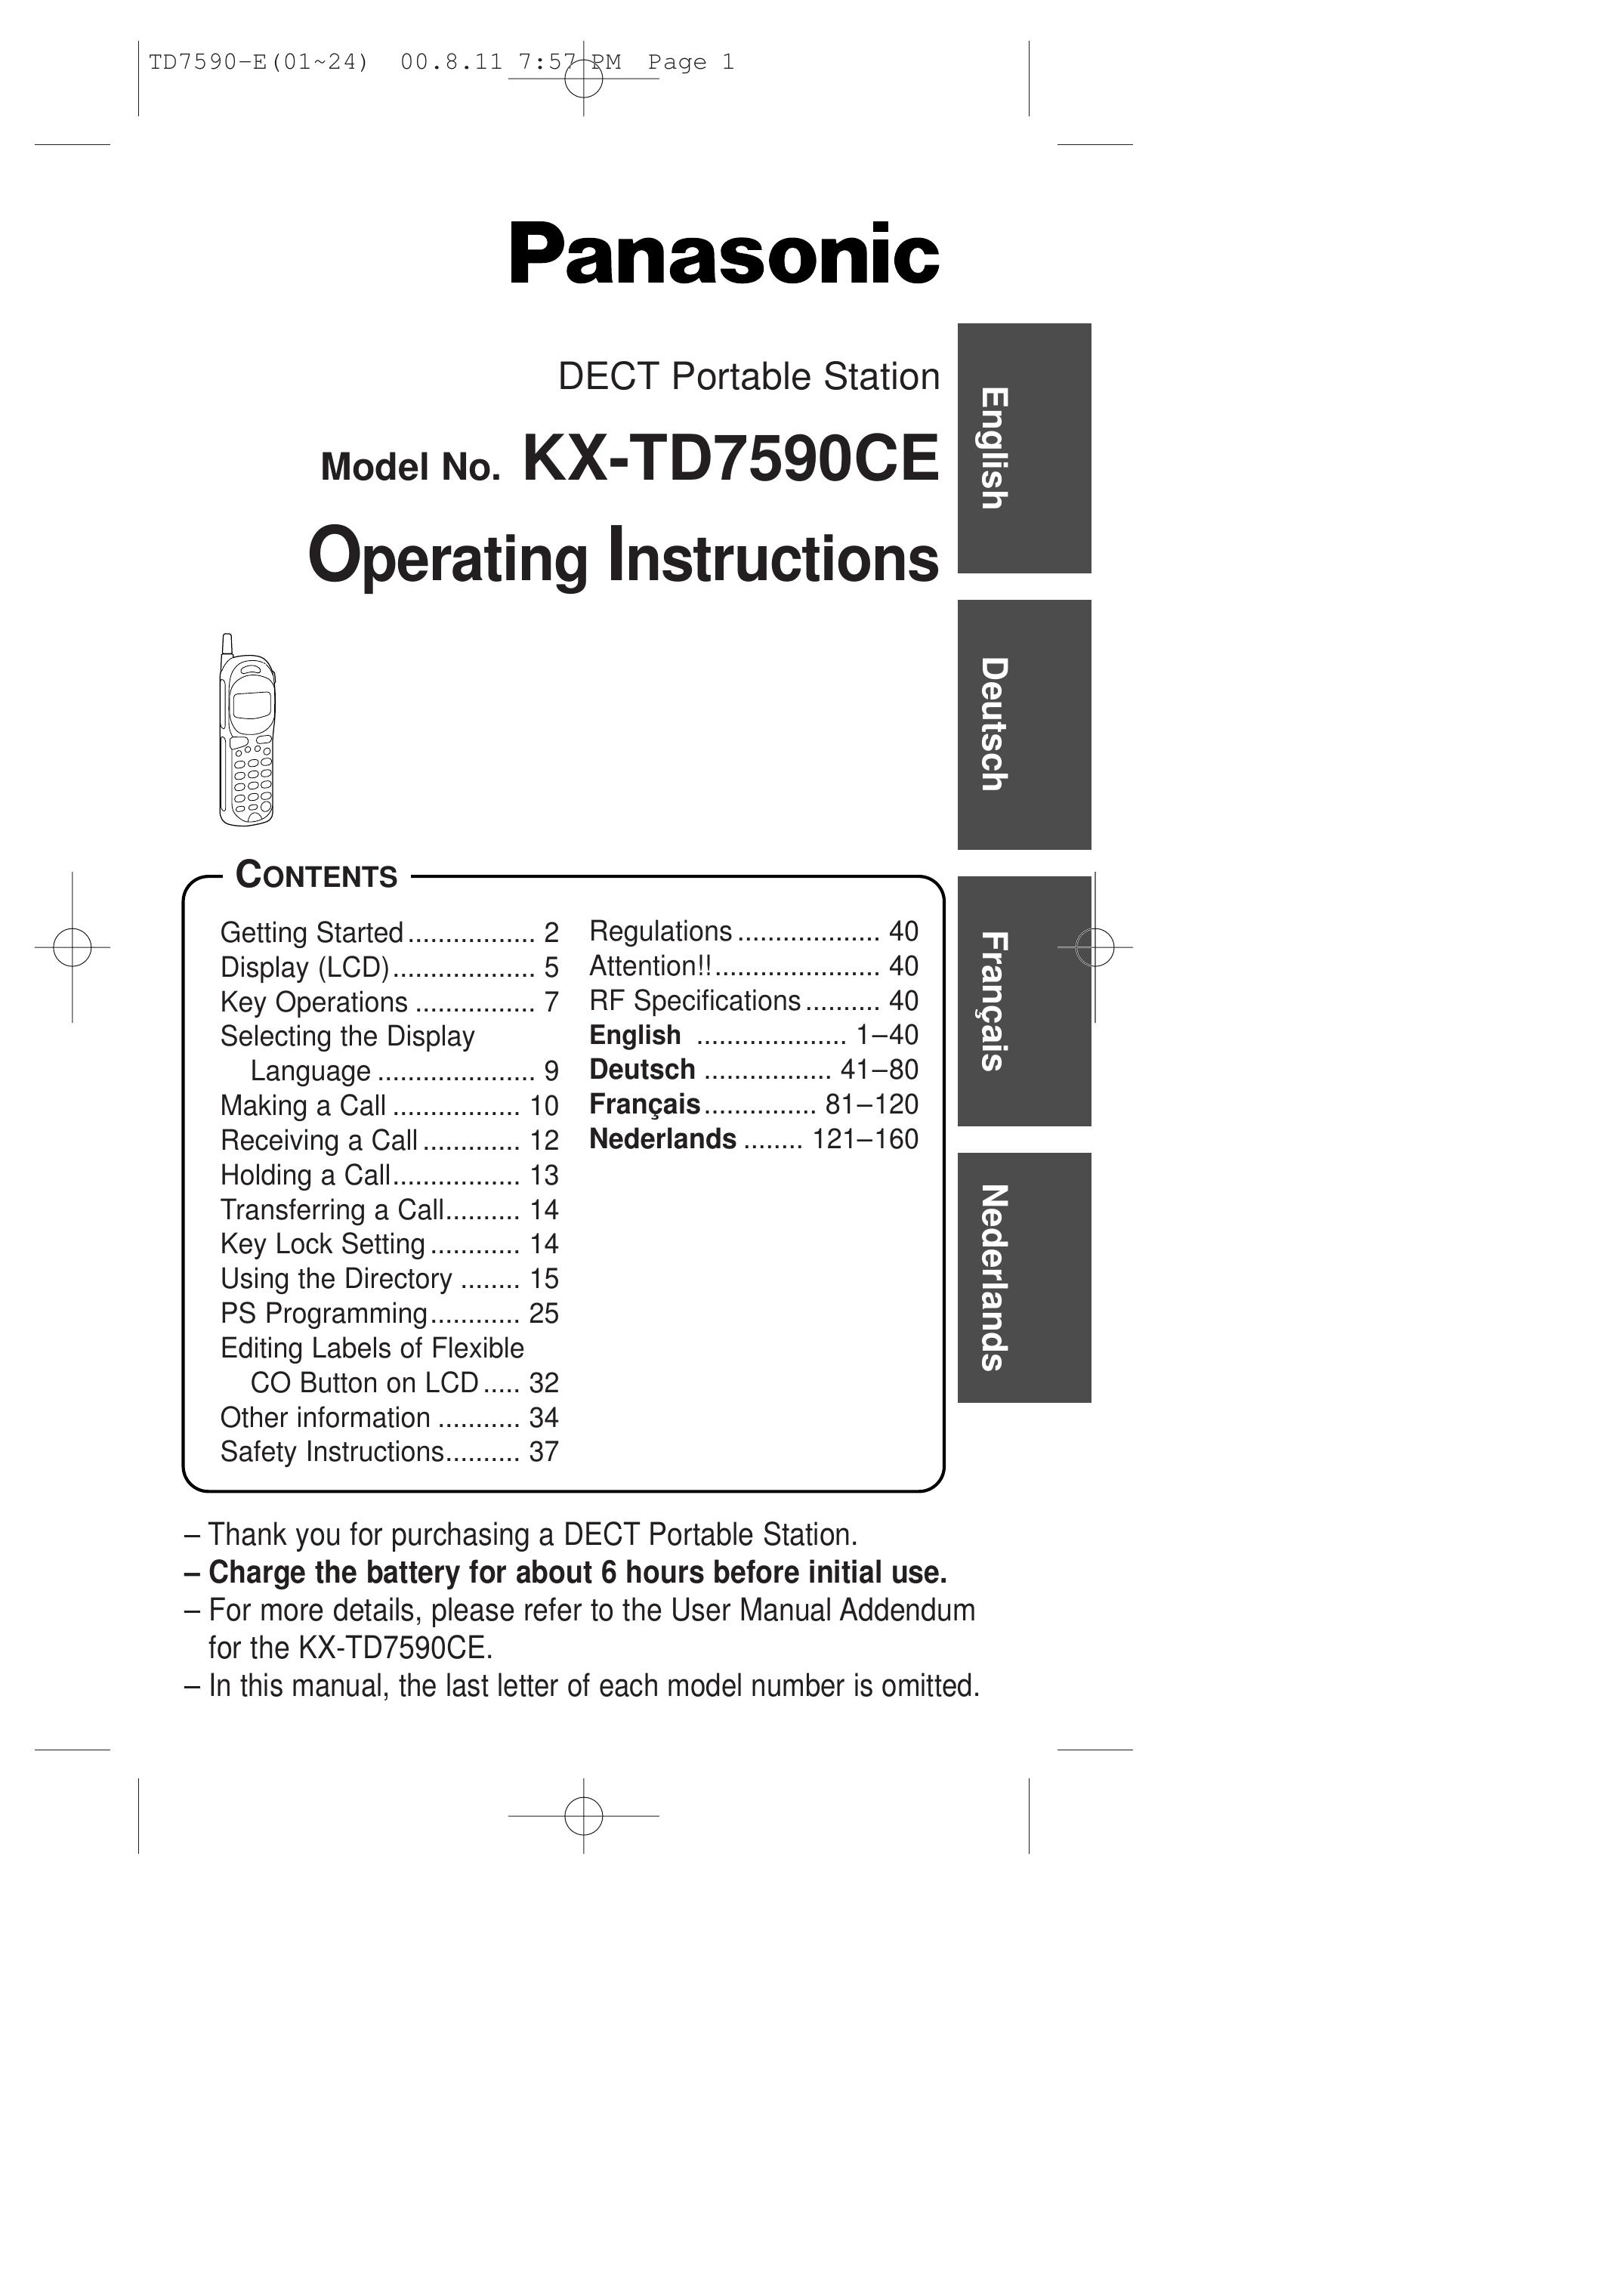 Panasonic KX-TD7590CE Marine GPS System User Manual